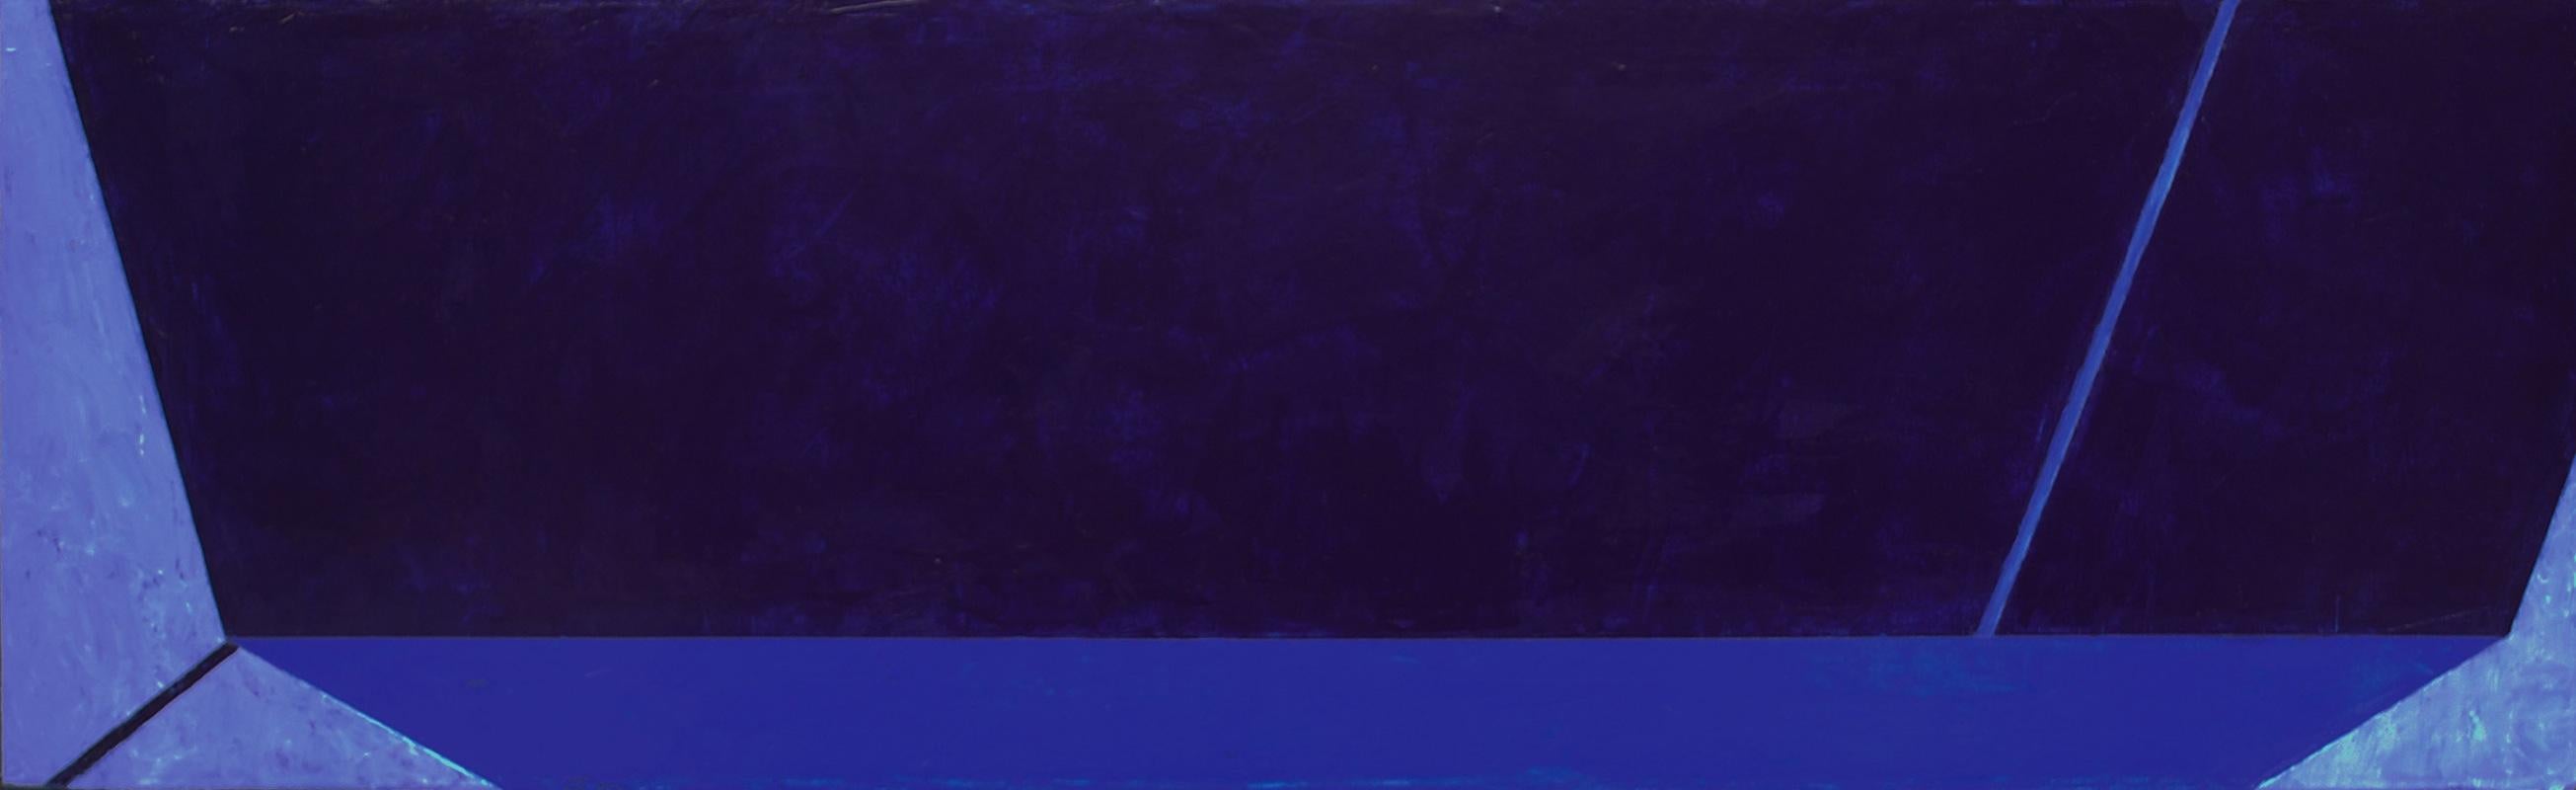 Macyn Bolt, Untitled (Contour), 2018, Minimalist, acrylic, 16 x 20 x 2 inches For Sale 5